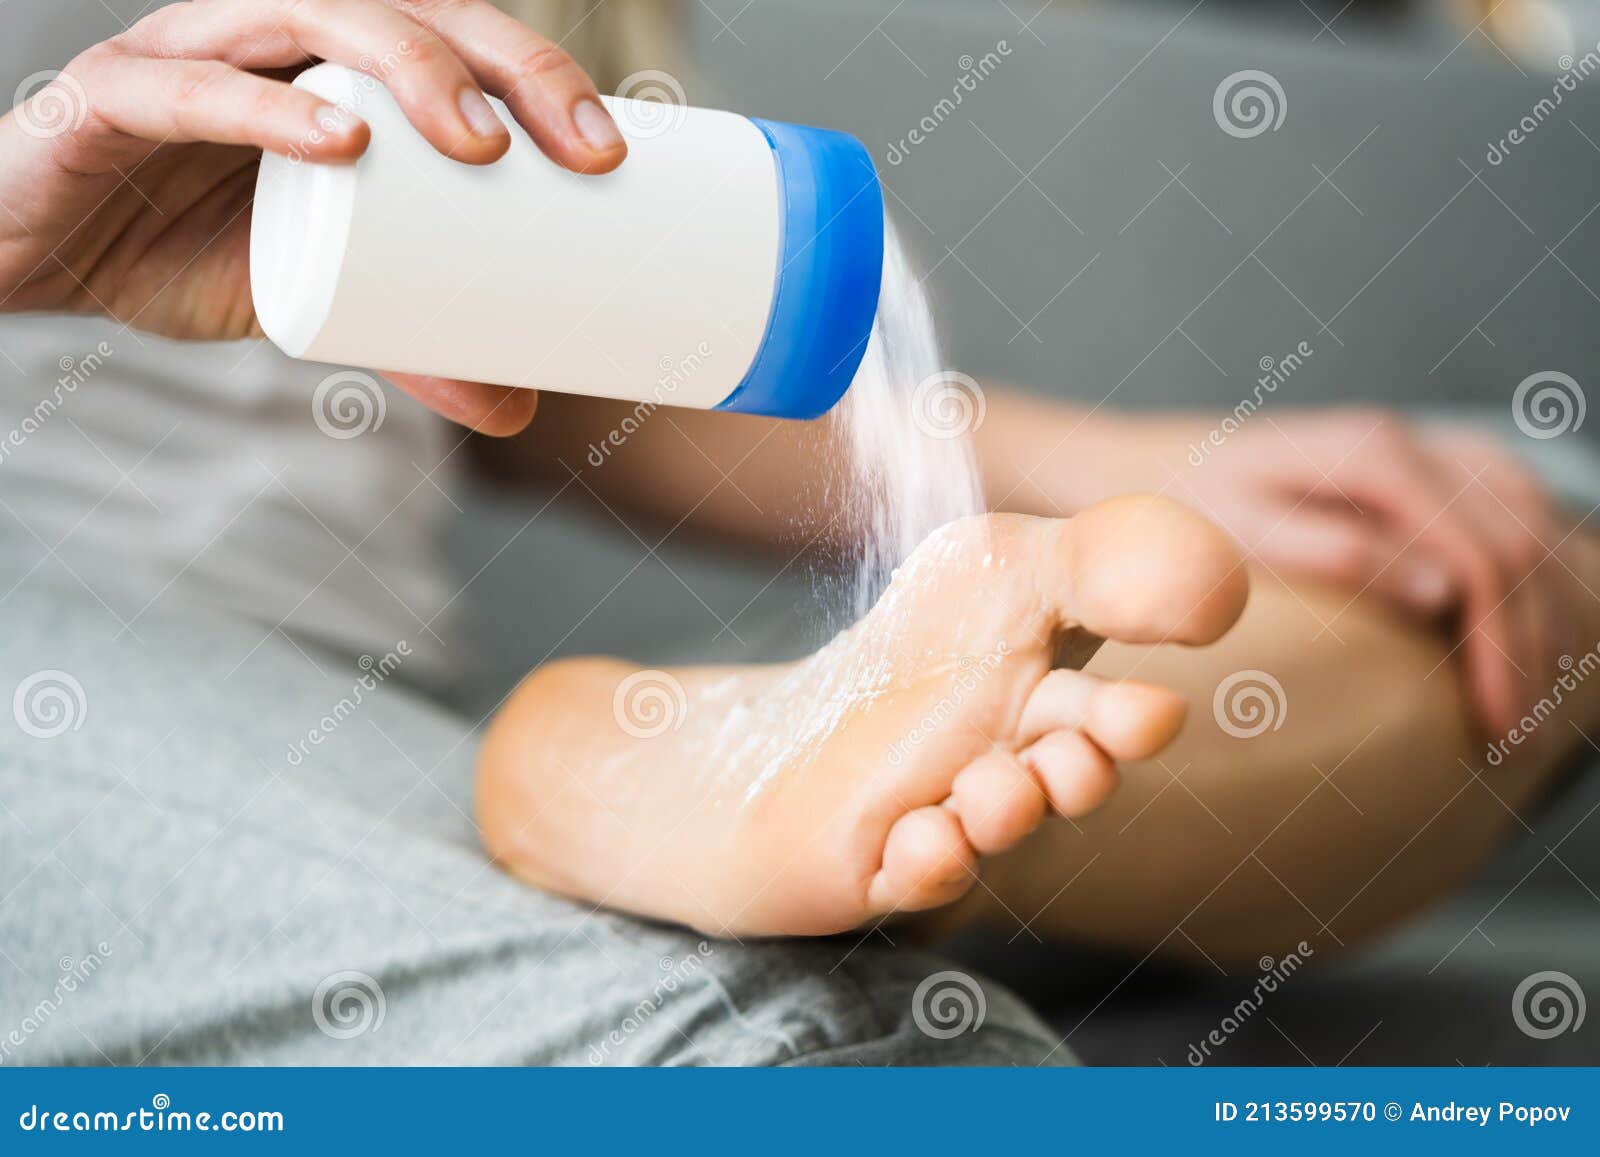 antifungal talcum powder on foot. feet fungus